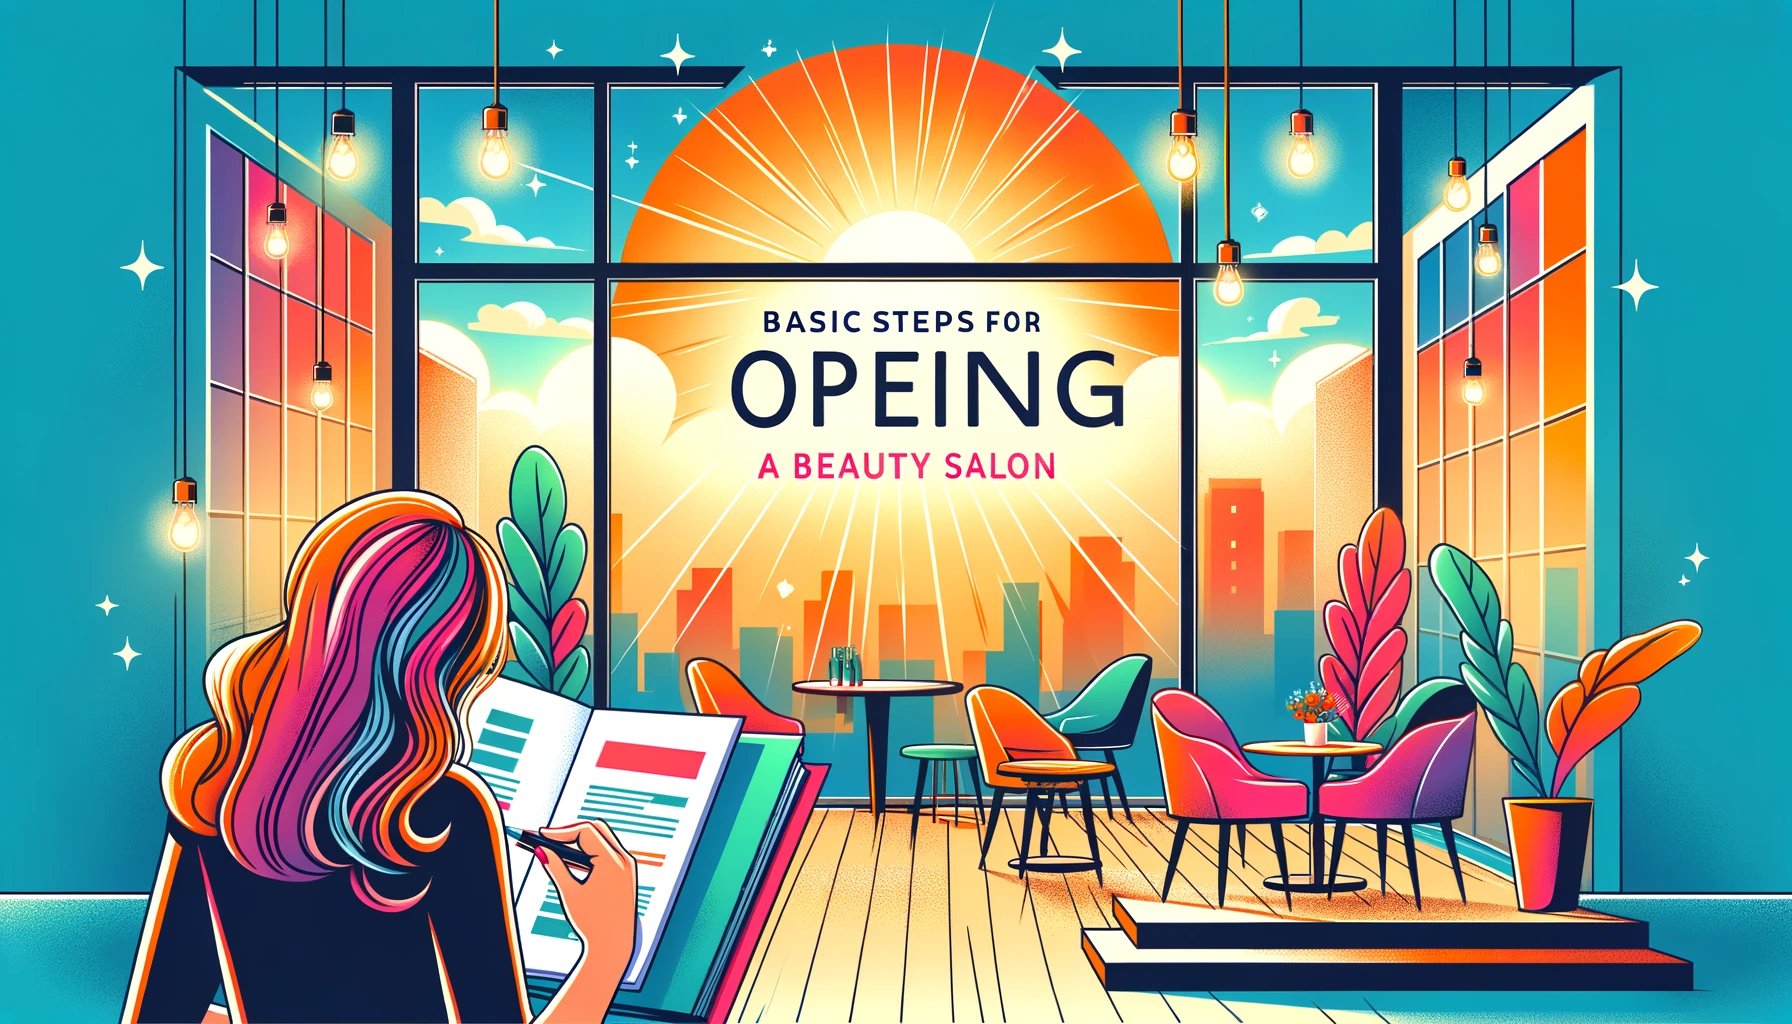  Basics of opening a beauty salon